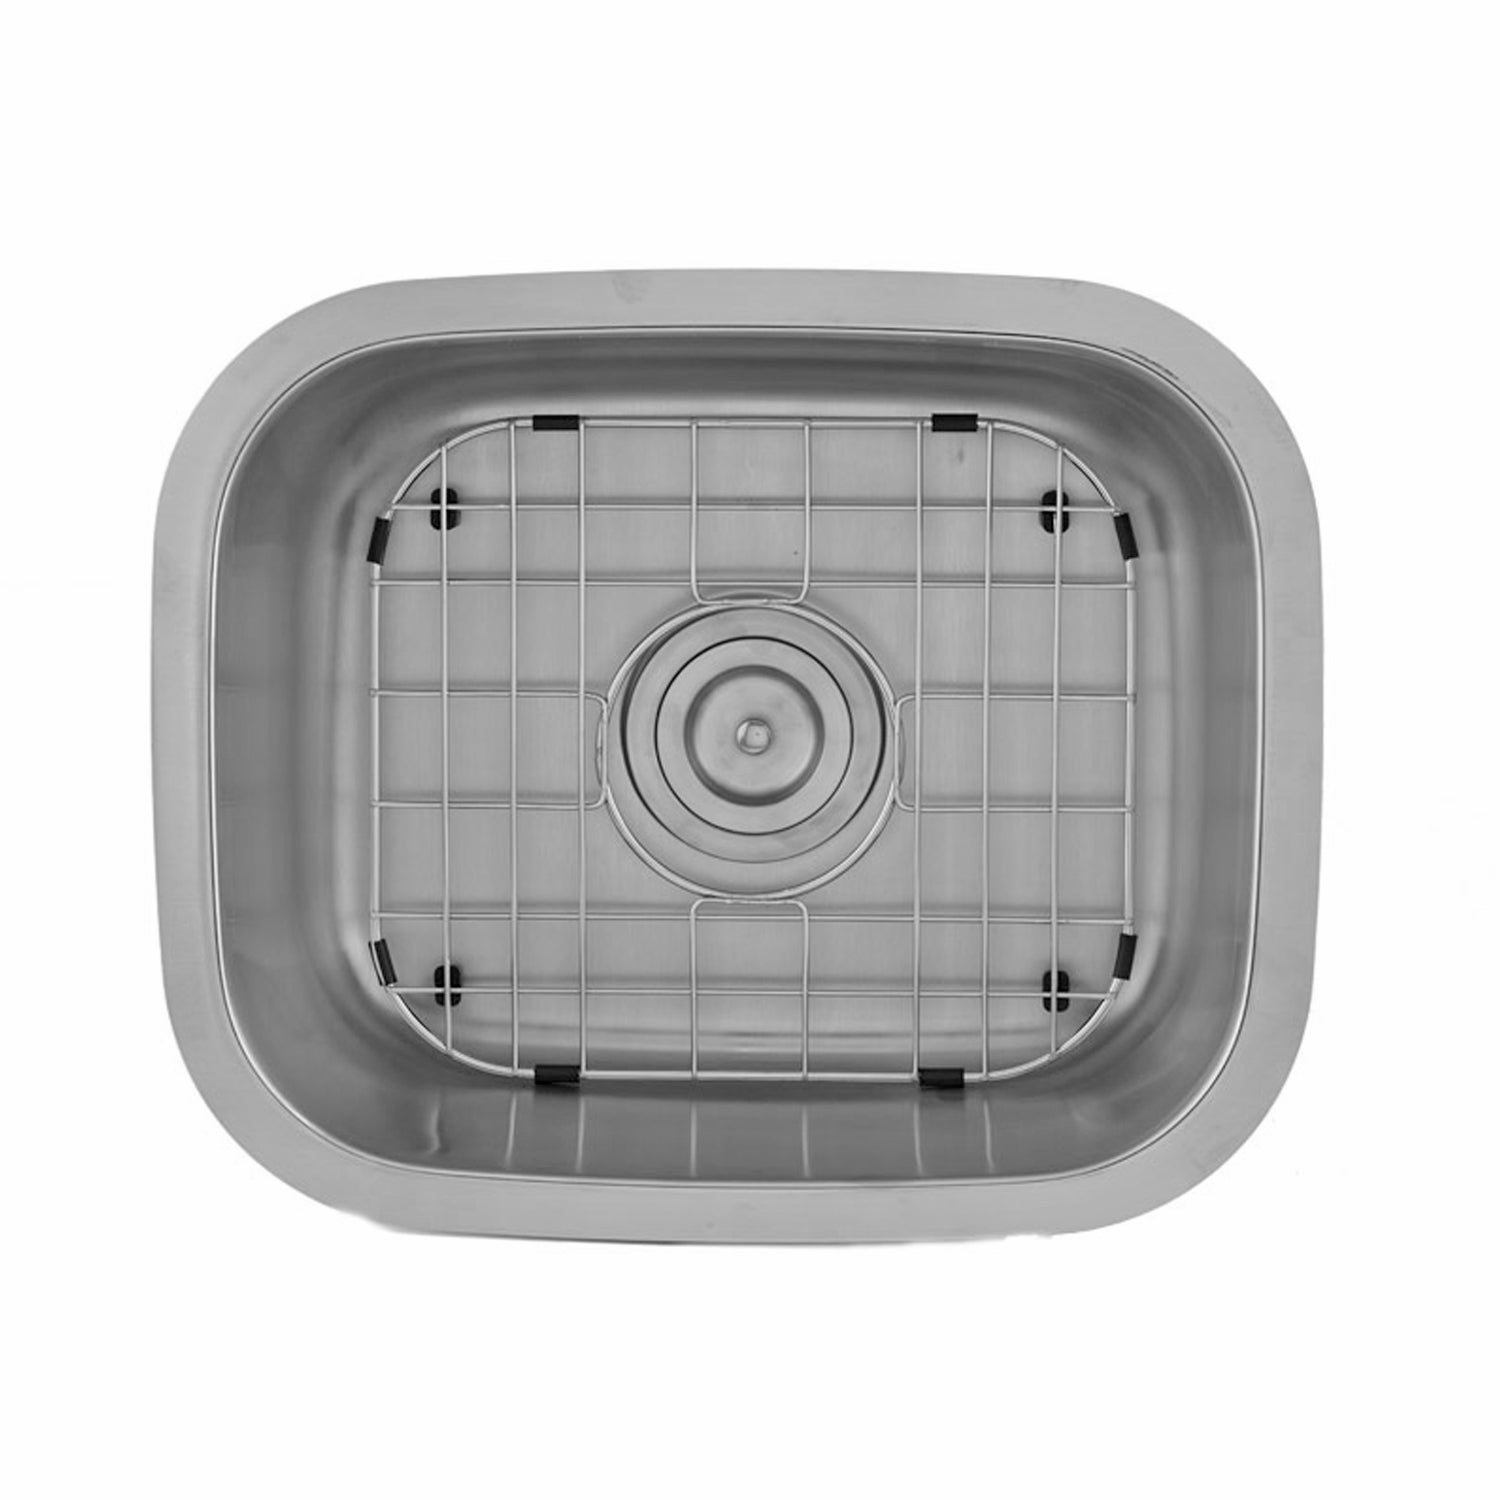 DAX Single Bowl Undermount Kitchen Sink, 18 Gauge Stainless Steel, Brushed Finish , 18 x 15 x 7 (DAX-1815)